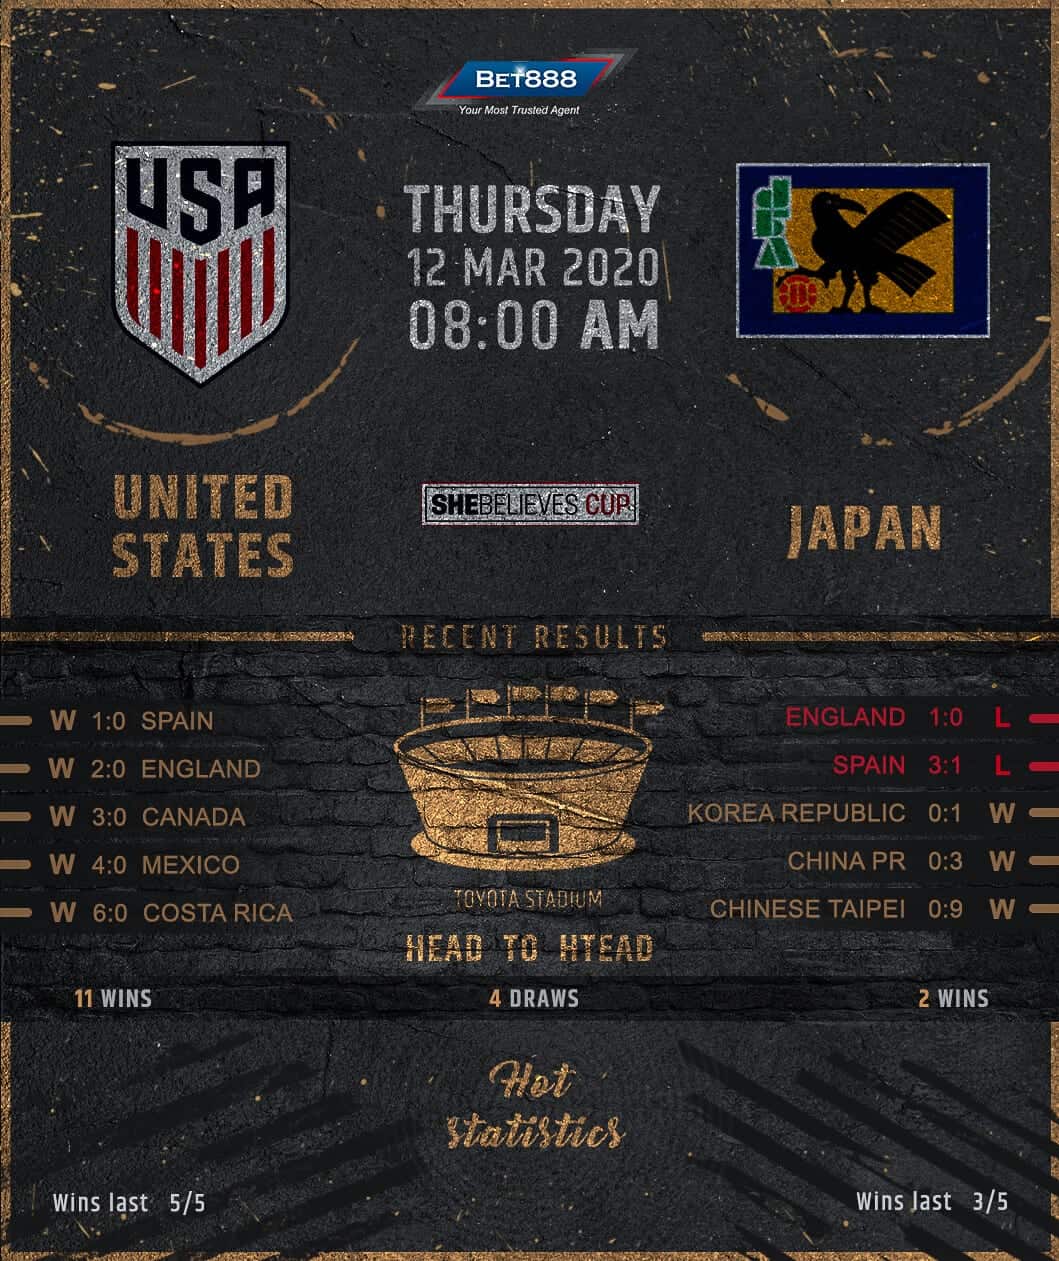 United States vs Japan 12/03/20